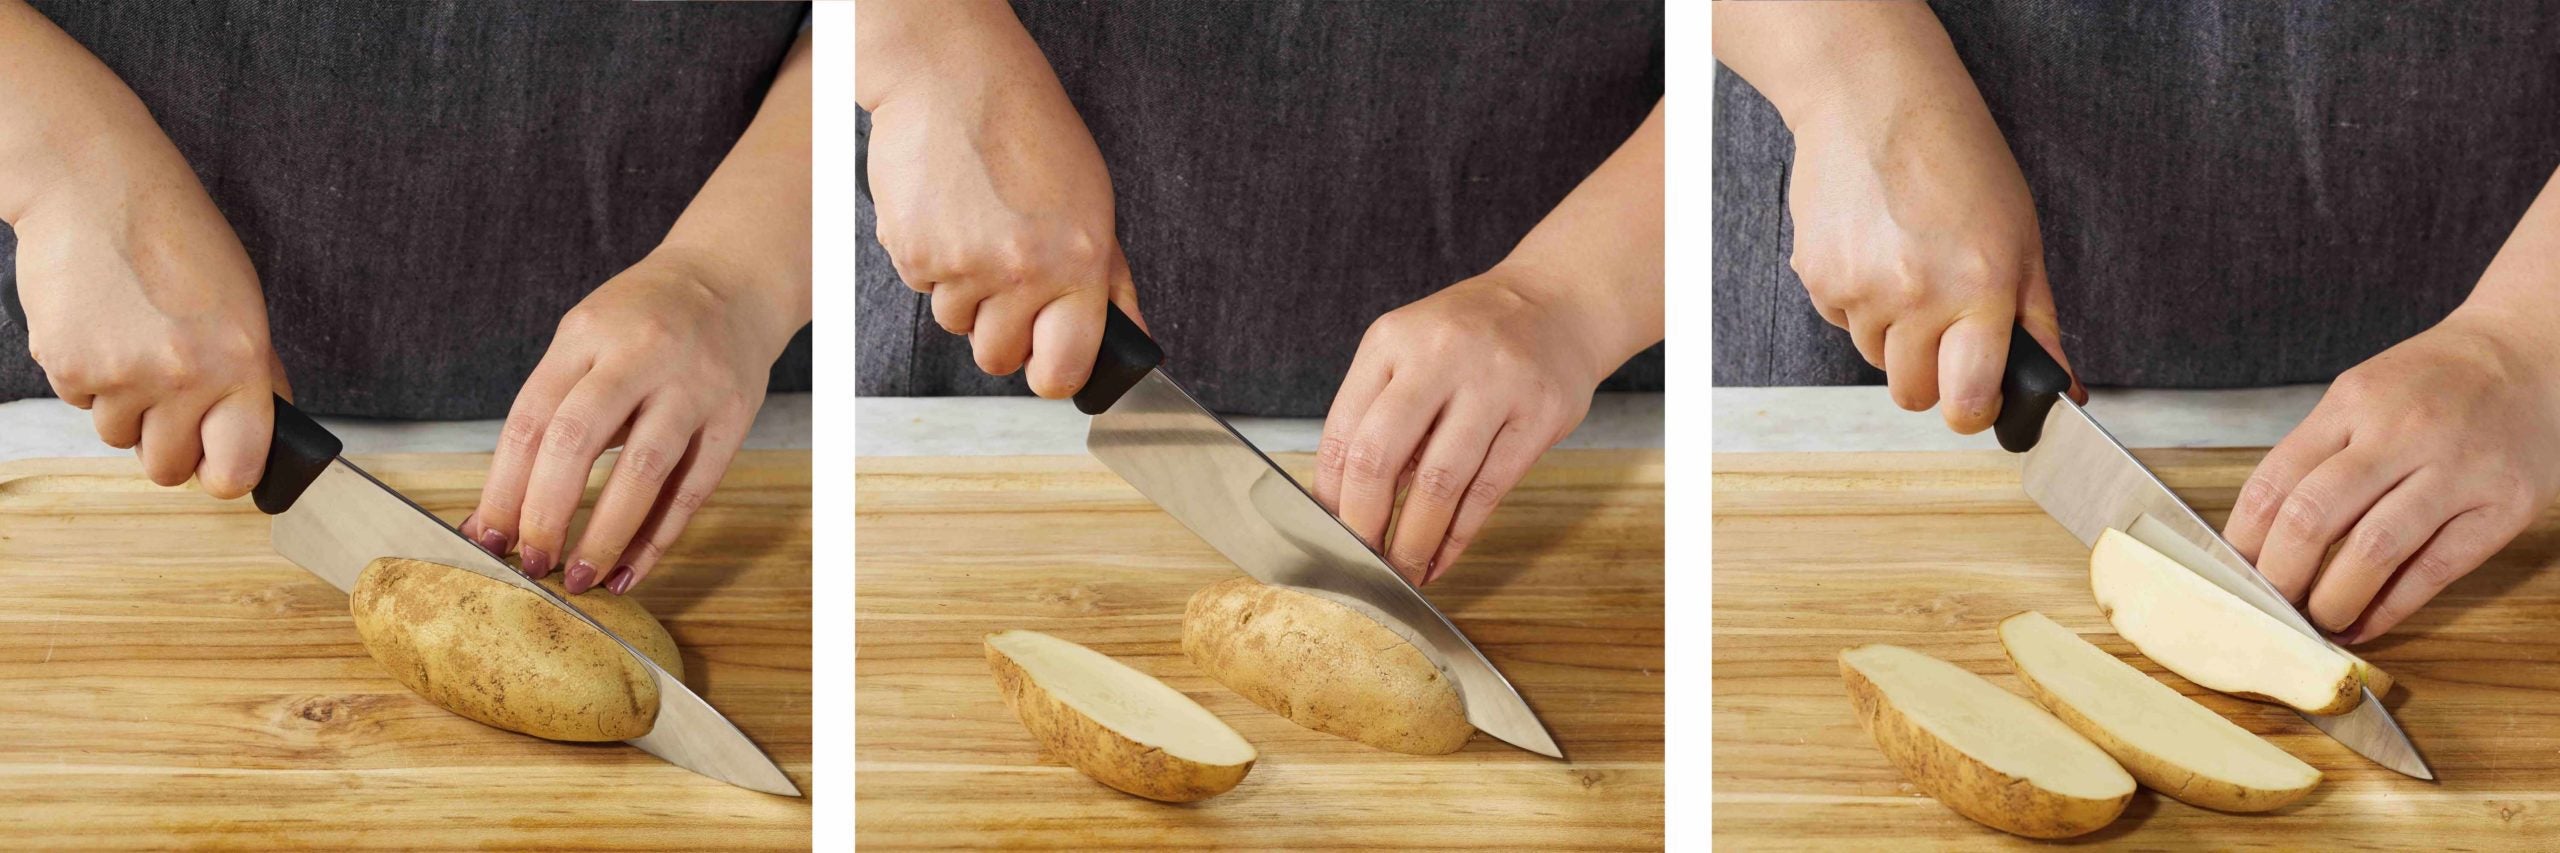 https://www.forksoverknives.com/wp-content/uploads/how-to-cut-potato-wedges-scaled.jpg